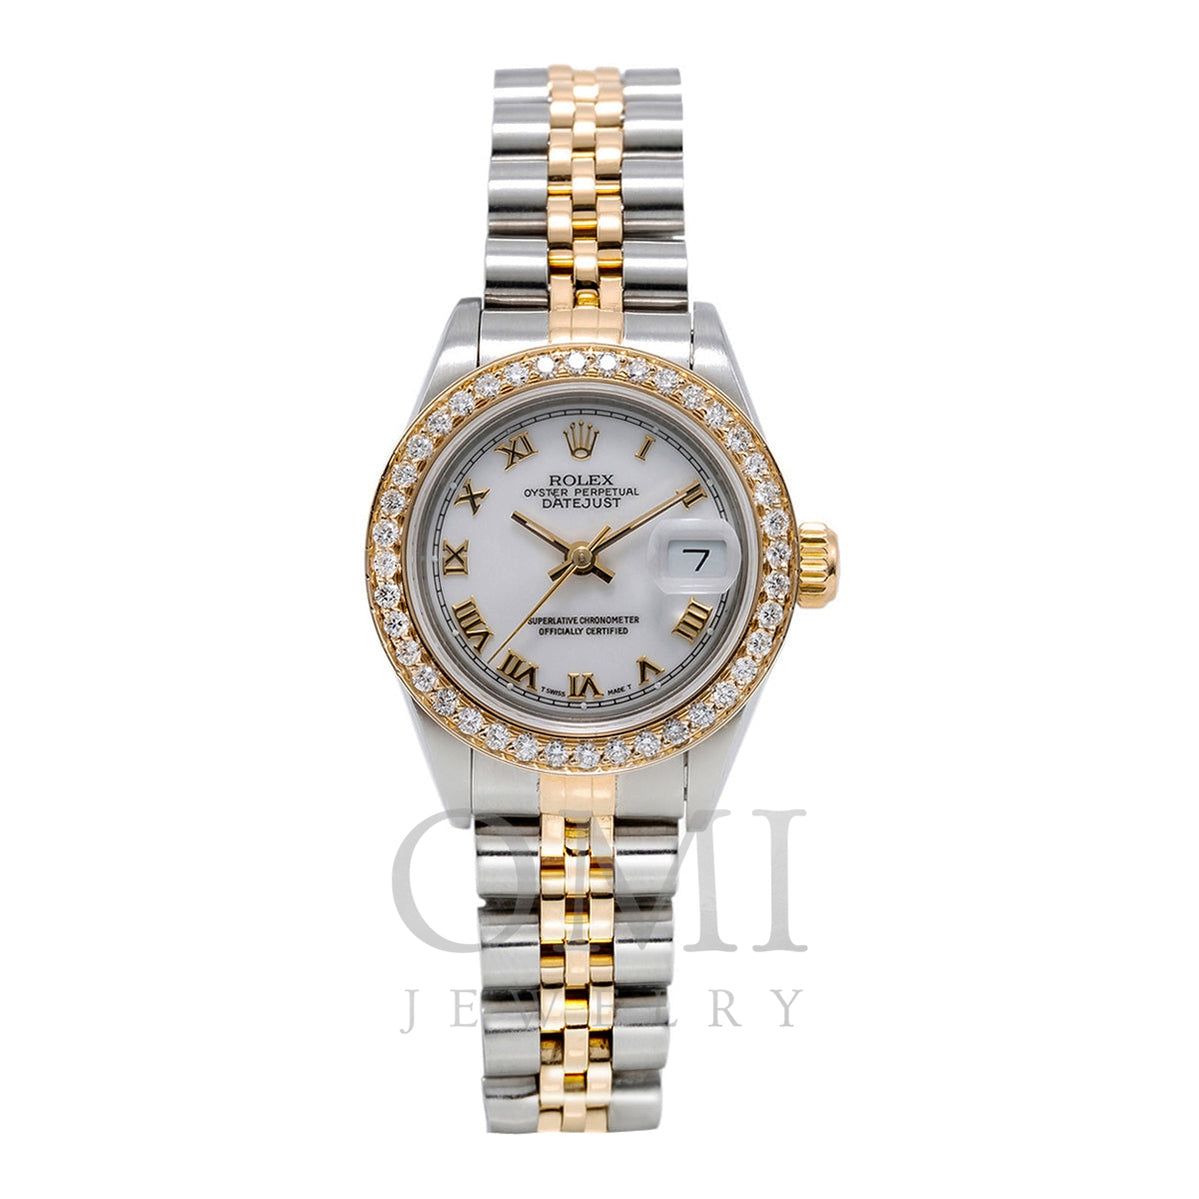 Rolex Datejust Two Tone Diamond Watch, 69173 26mm, White with Roman Nu OMI Jewelry